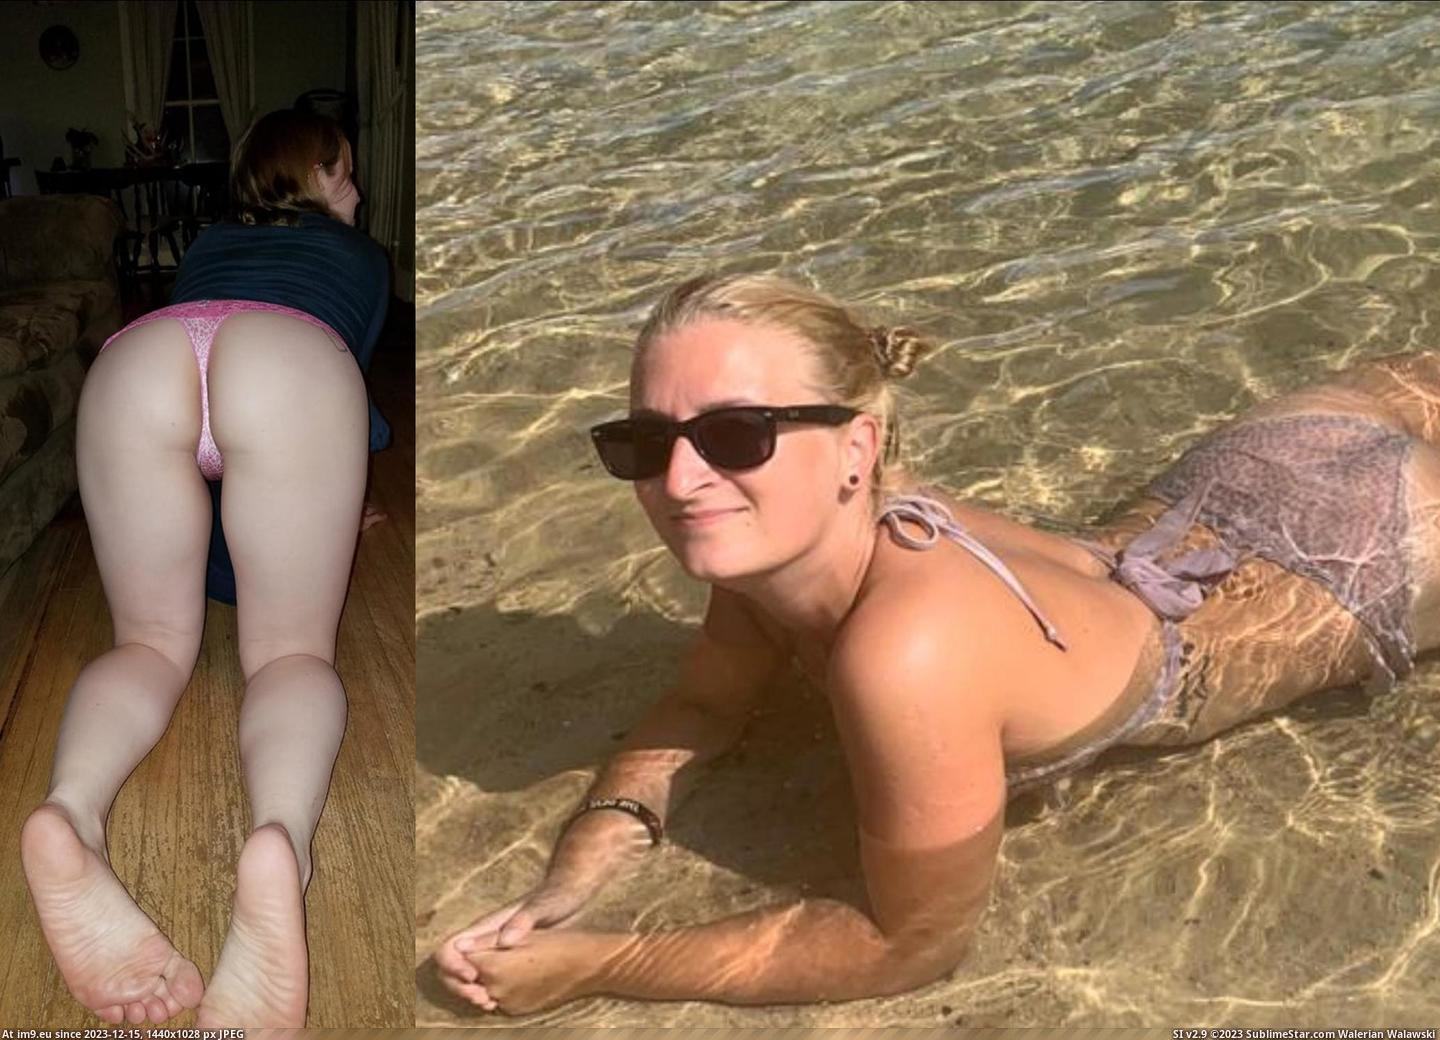 #Sexy #Pussy #Ass #Wichsvorlage #Titten #Nude #Blonde #Sandra wichsvorlage_sandra (15) Pic. (Obraz z album wankmeat))